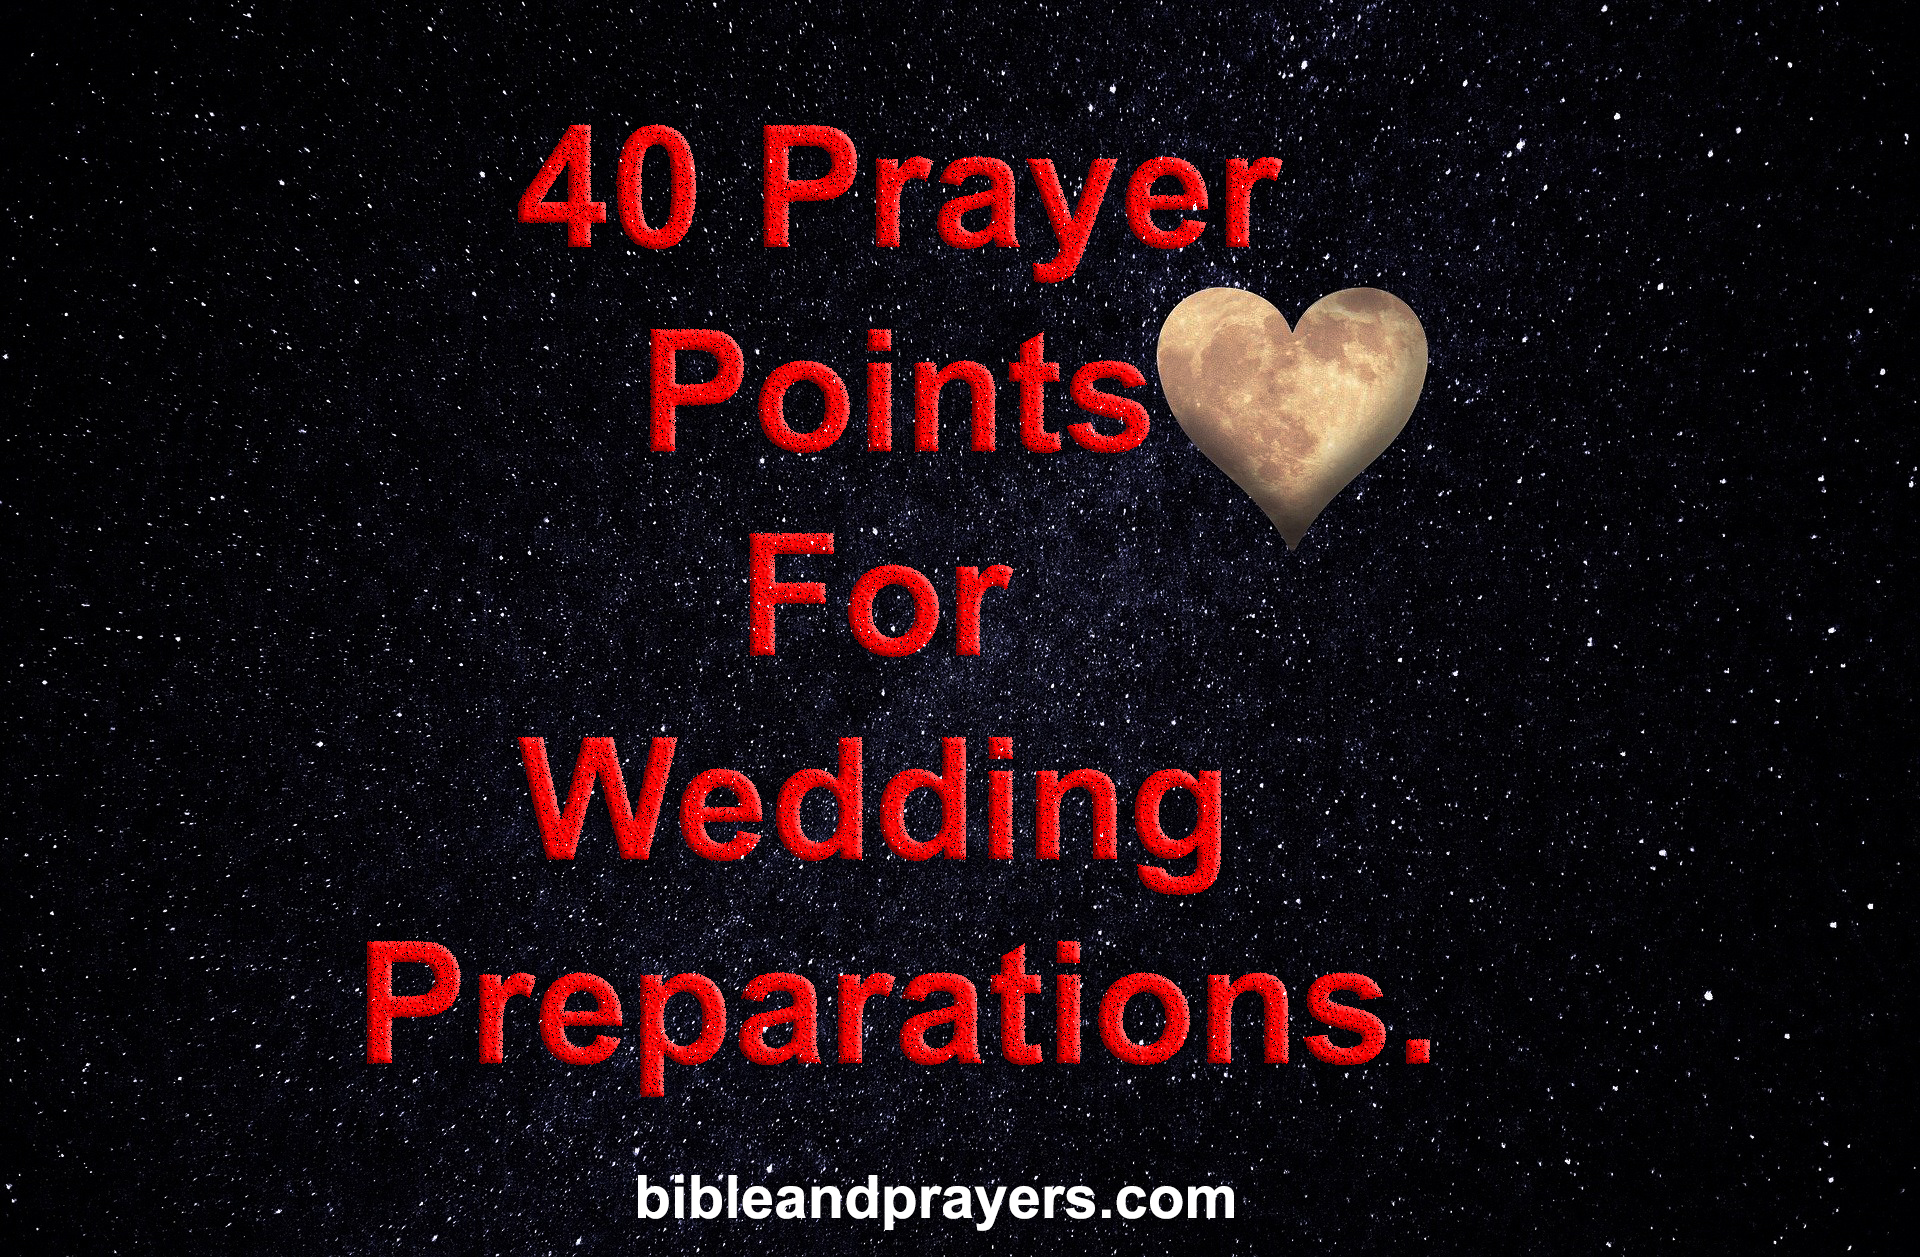 40 Prayer Points For Wedding Preparations.